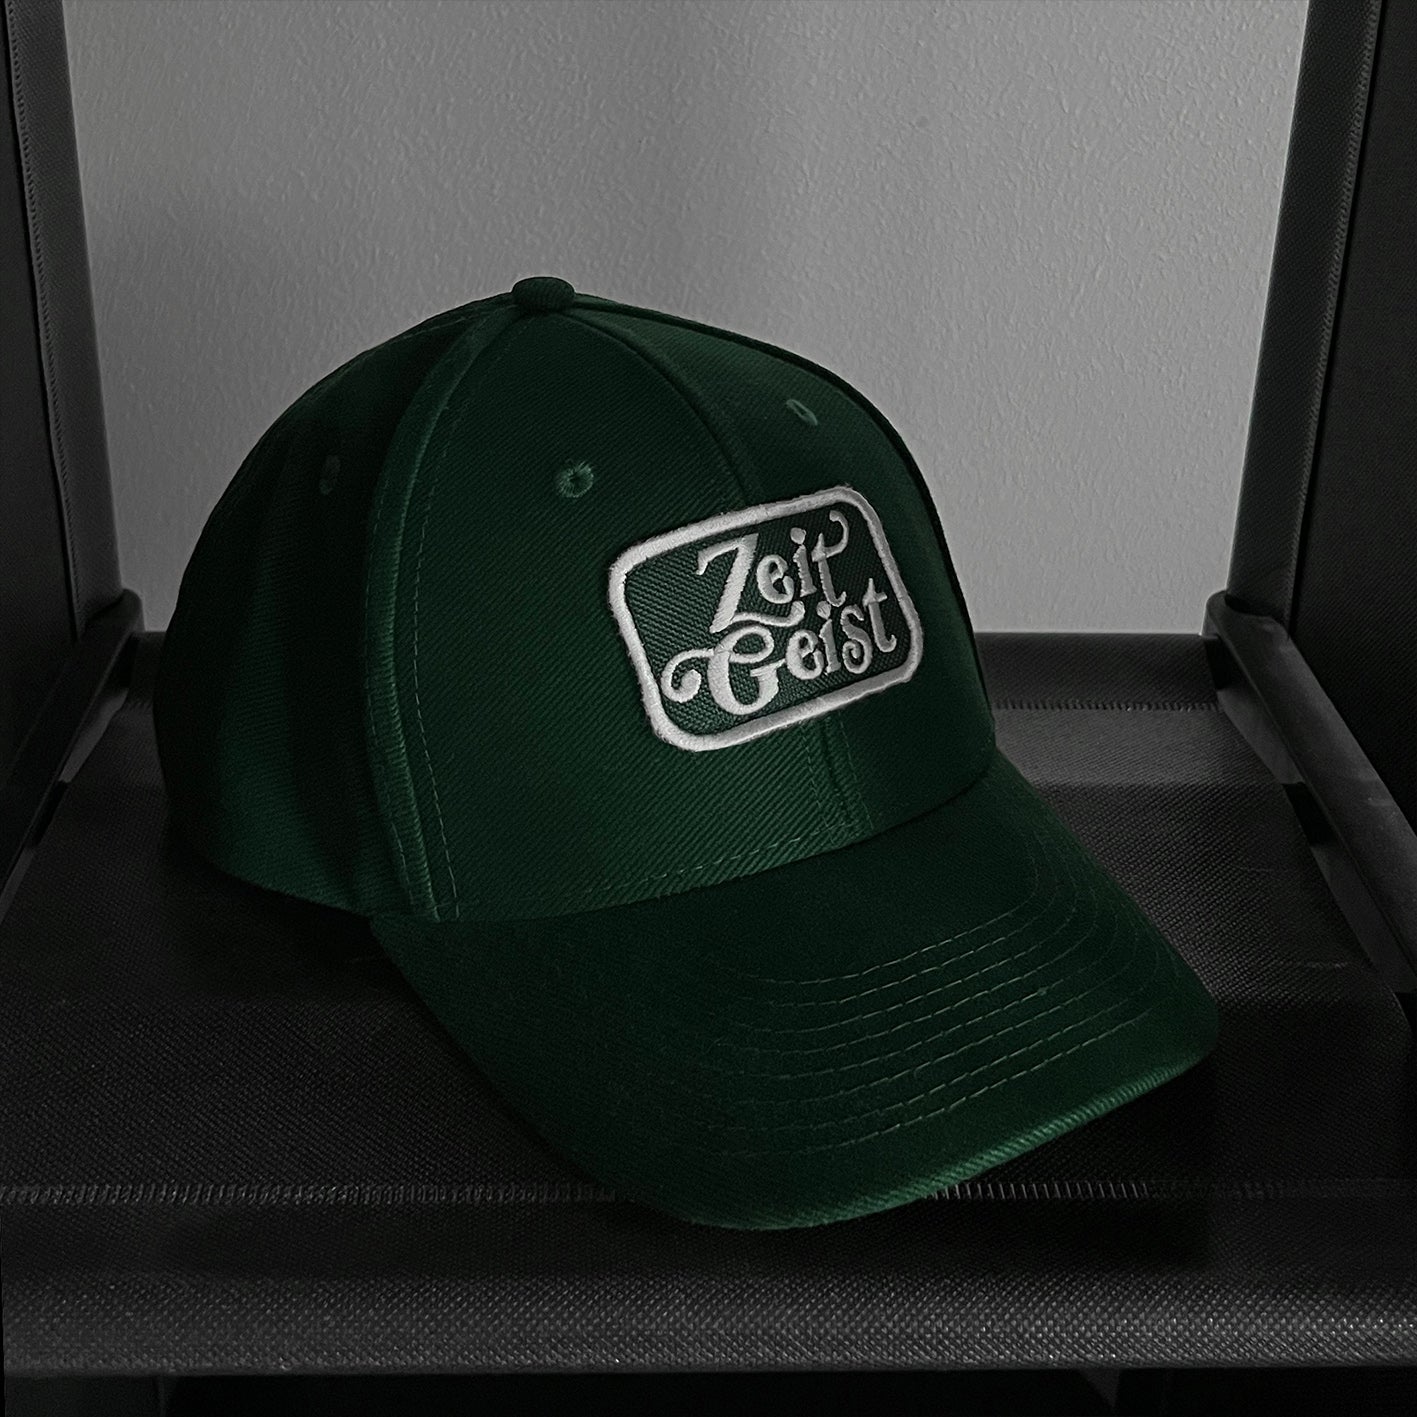 Racing Green Cap